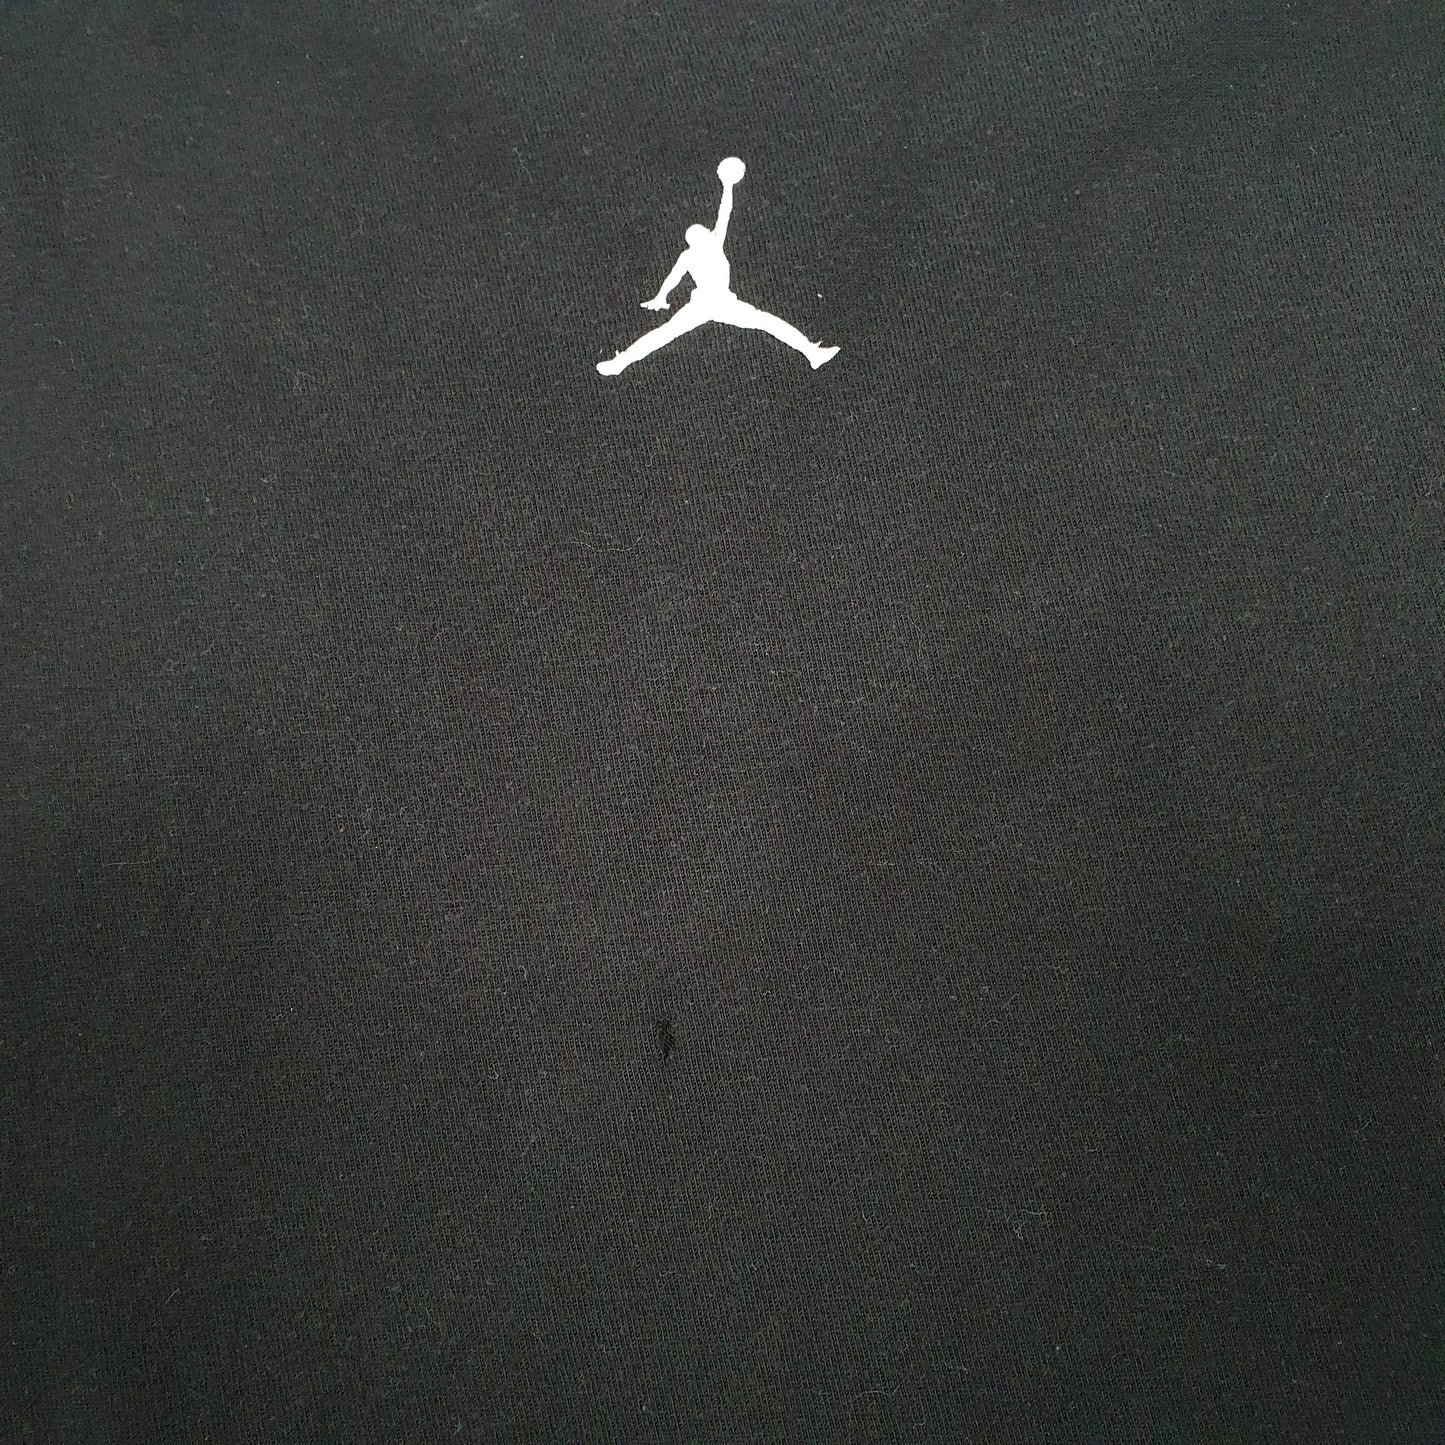 Mens Black Nike Air Jordan Michael Bionic Basketball Short Sleeve T Shirt